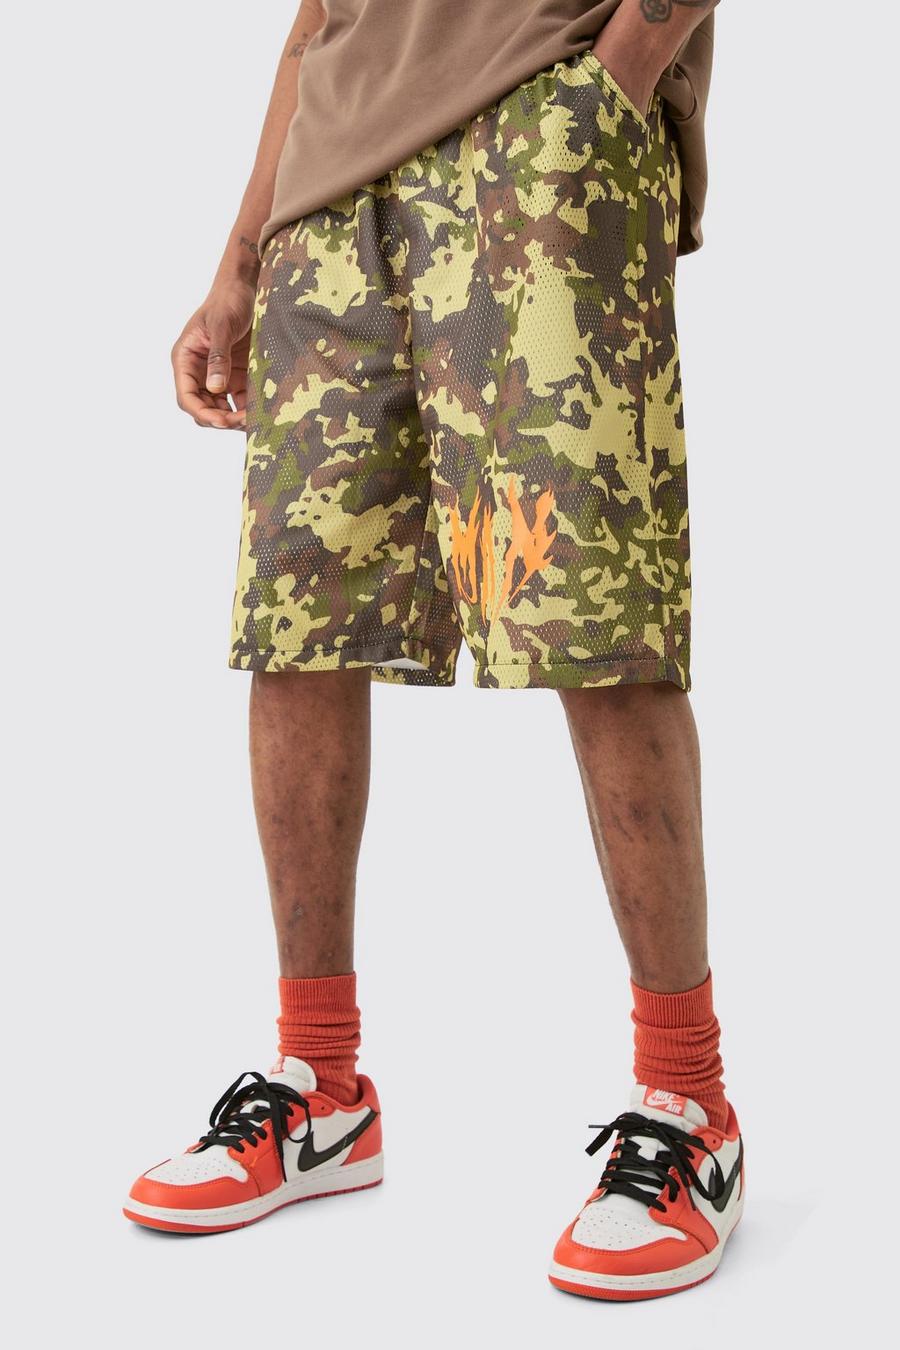 Tall Man Mesh Camouflage Basketball-Shorts, Multi